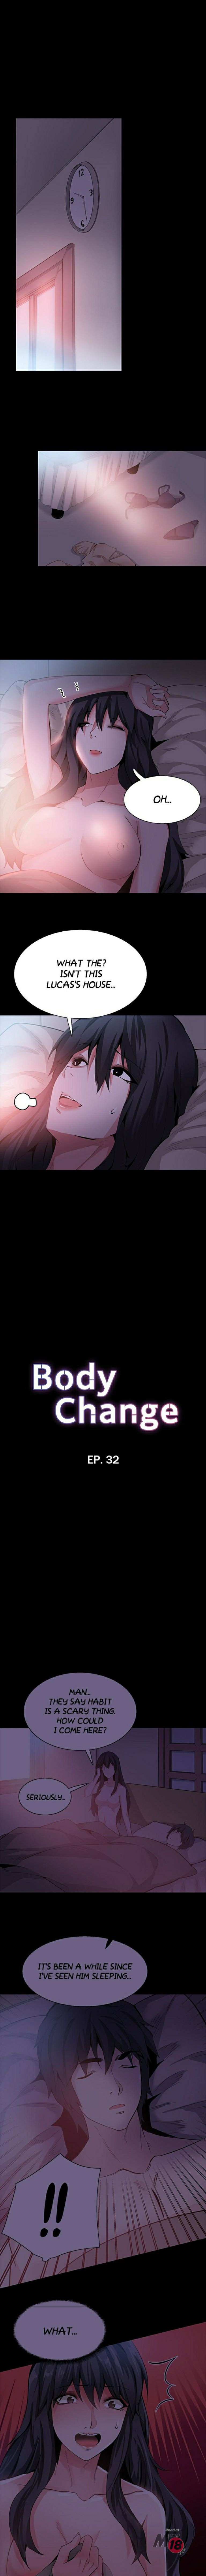 Body Change image